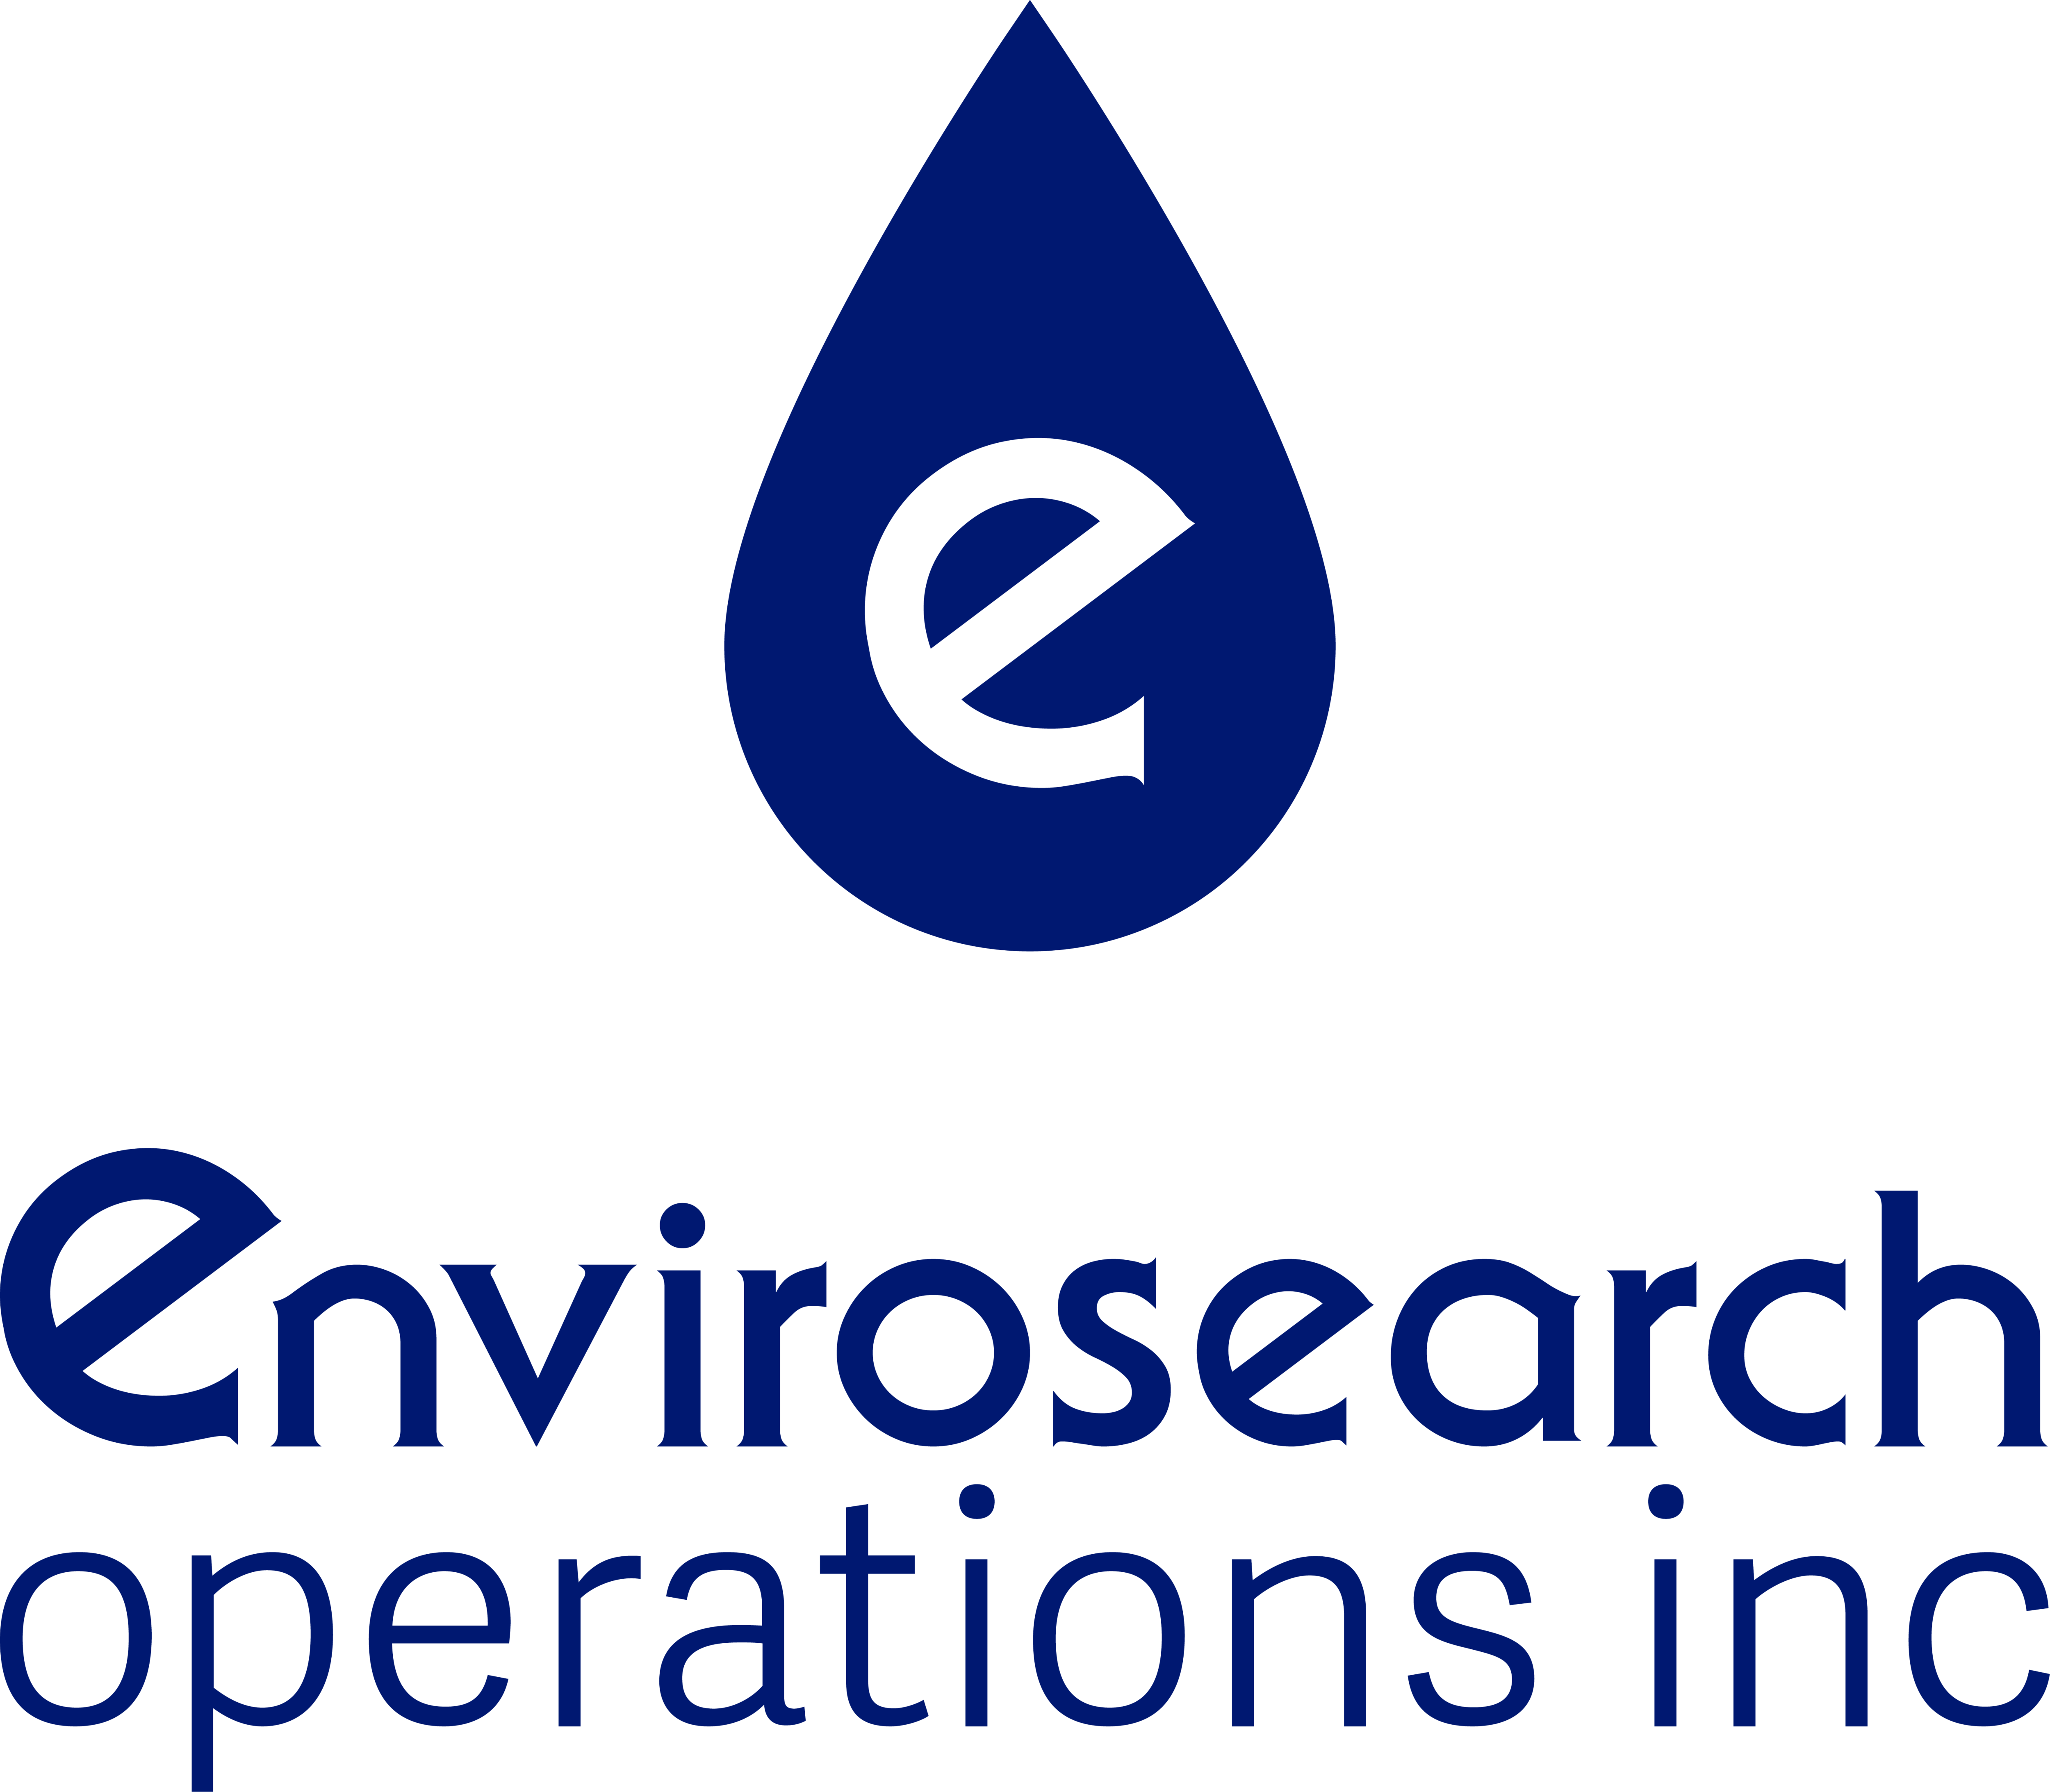 EnviroSearch Operations Inc